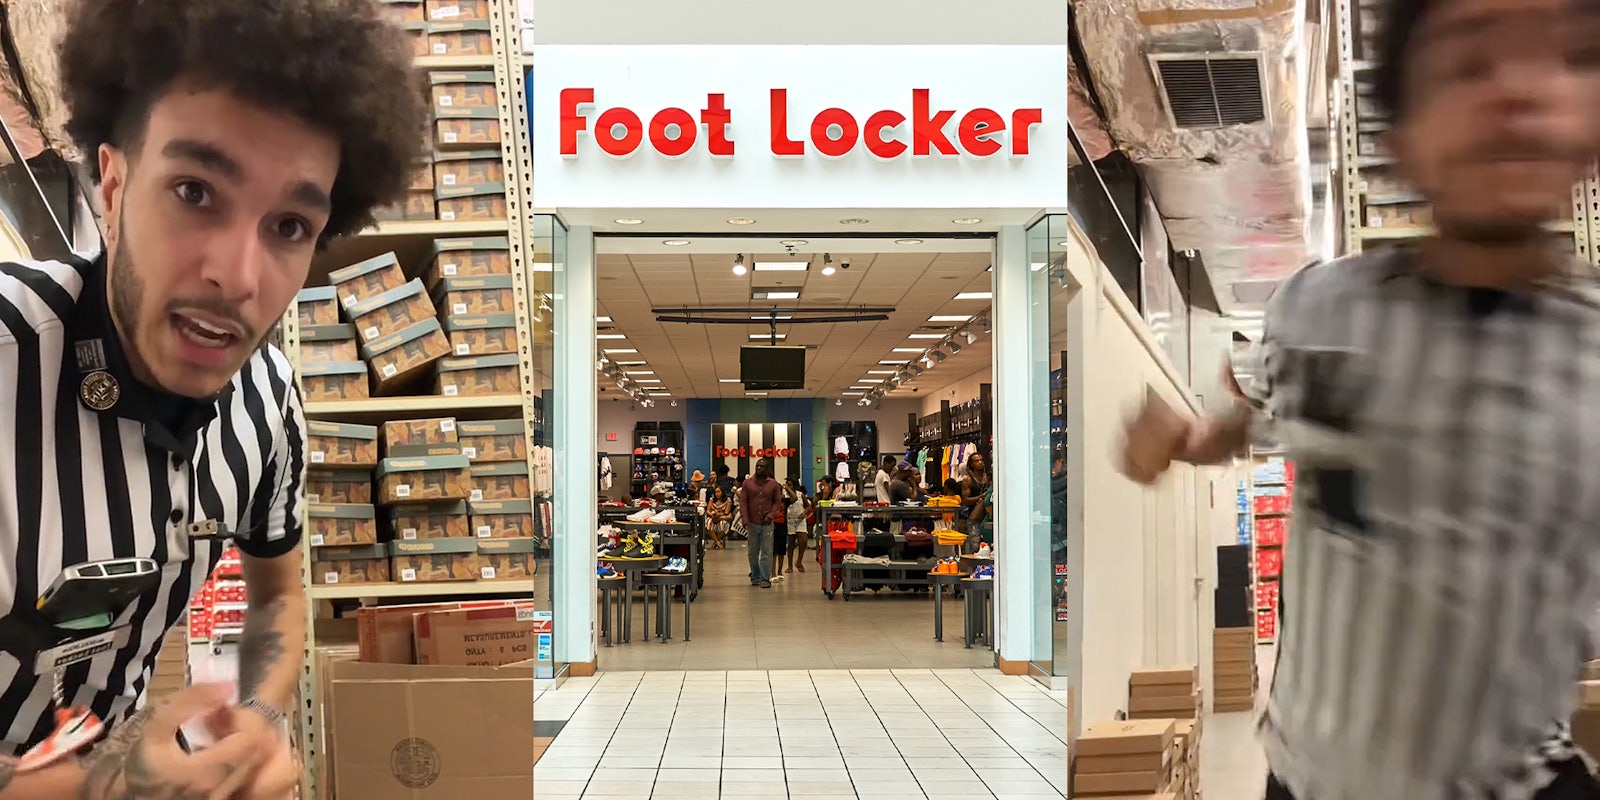 Foot Locker employee speaking (l) Foot Locker store with sign (c) Foot Locker employee punching camera (r)